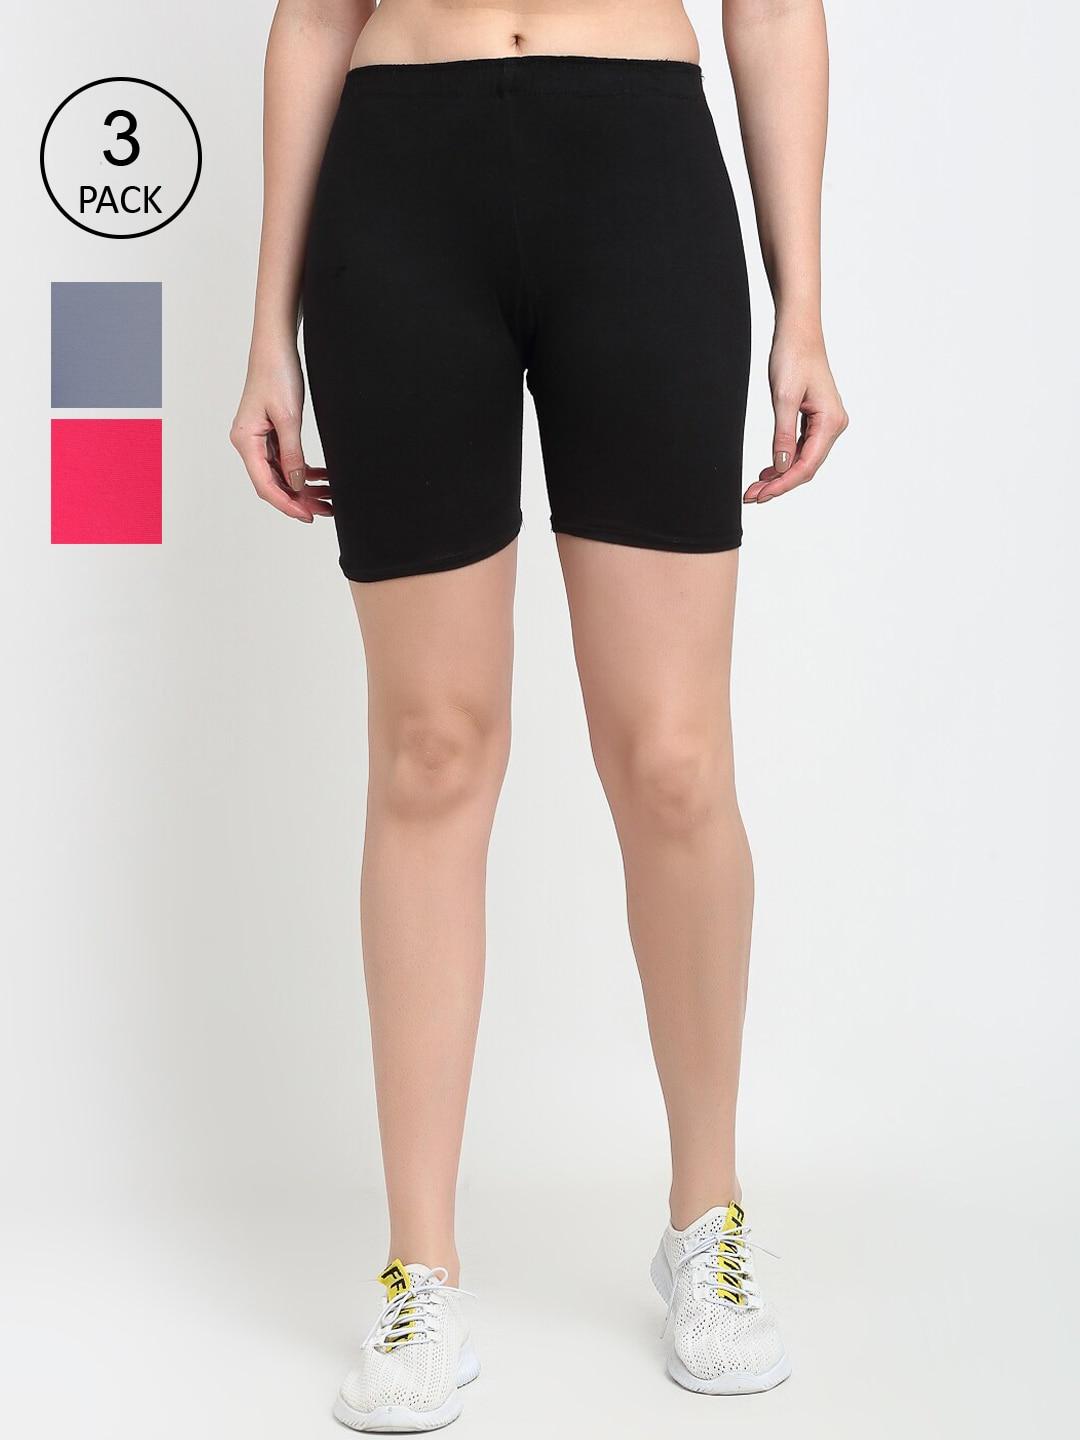 GRACIT Women Pack of 3 Solid Biker Shorts